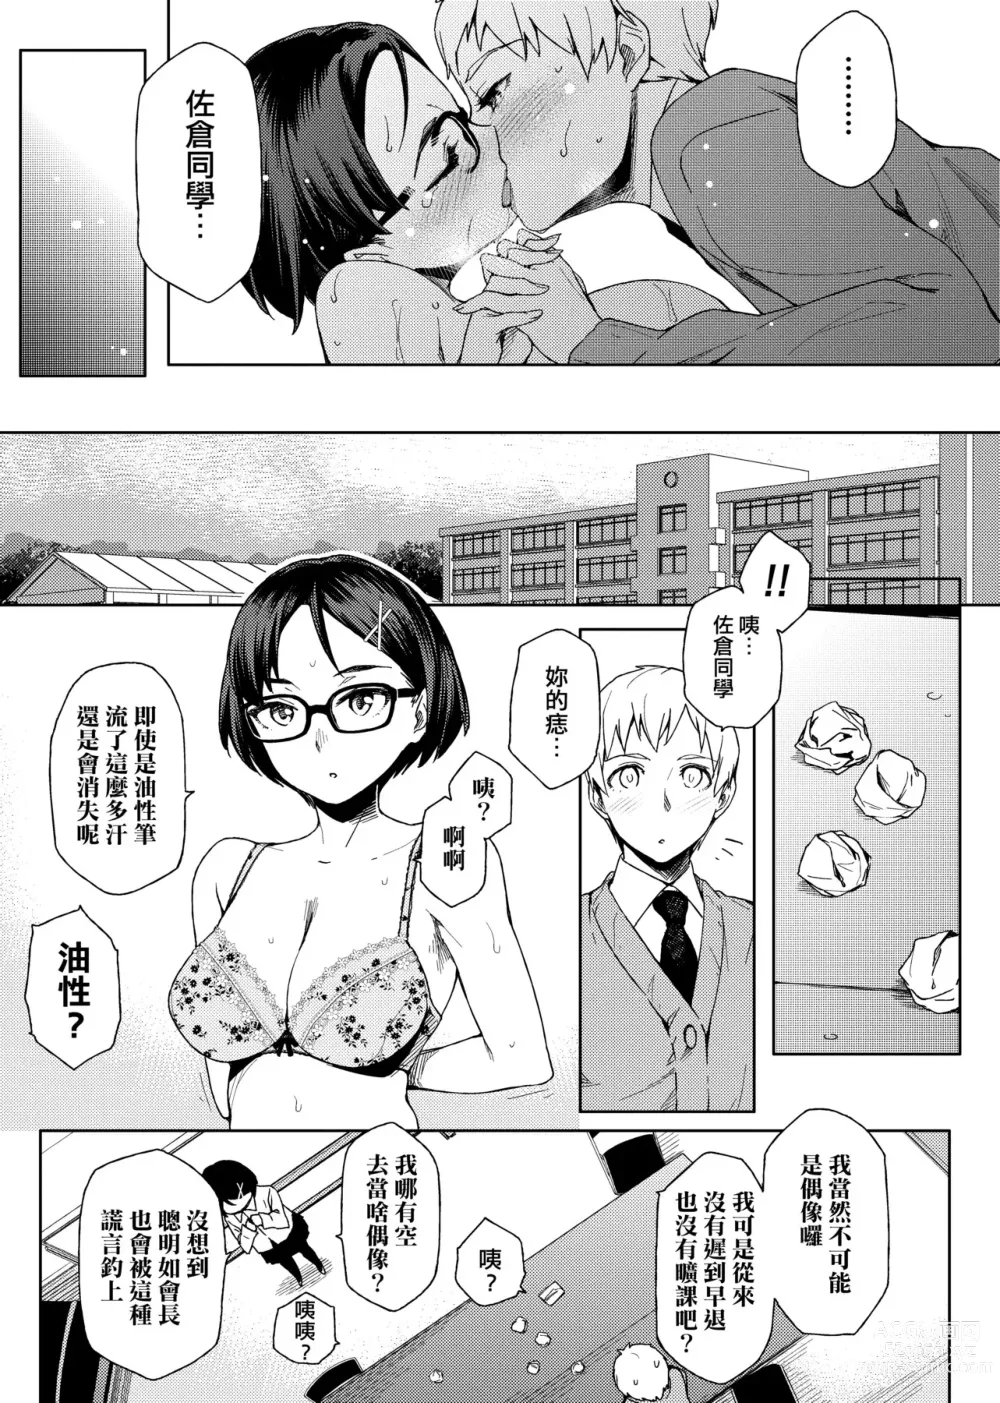 Page 228 of manga Natsu Koi Ota Girl - What Brings You to Japan?